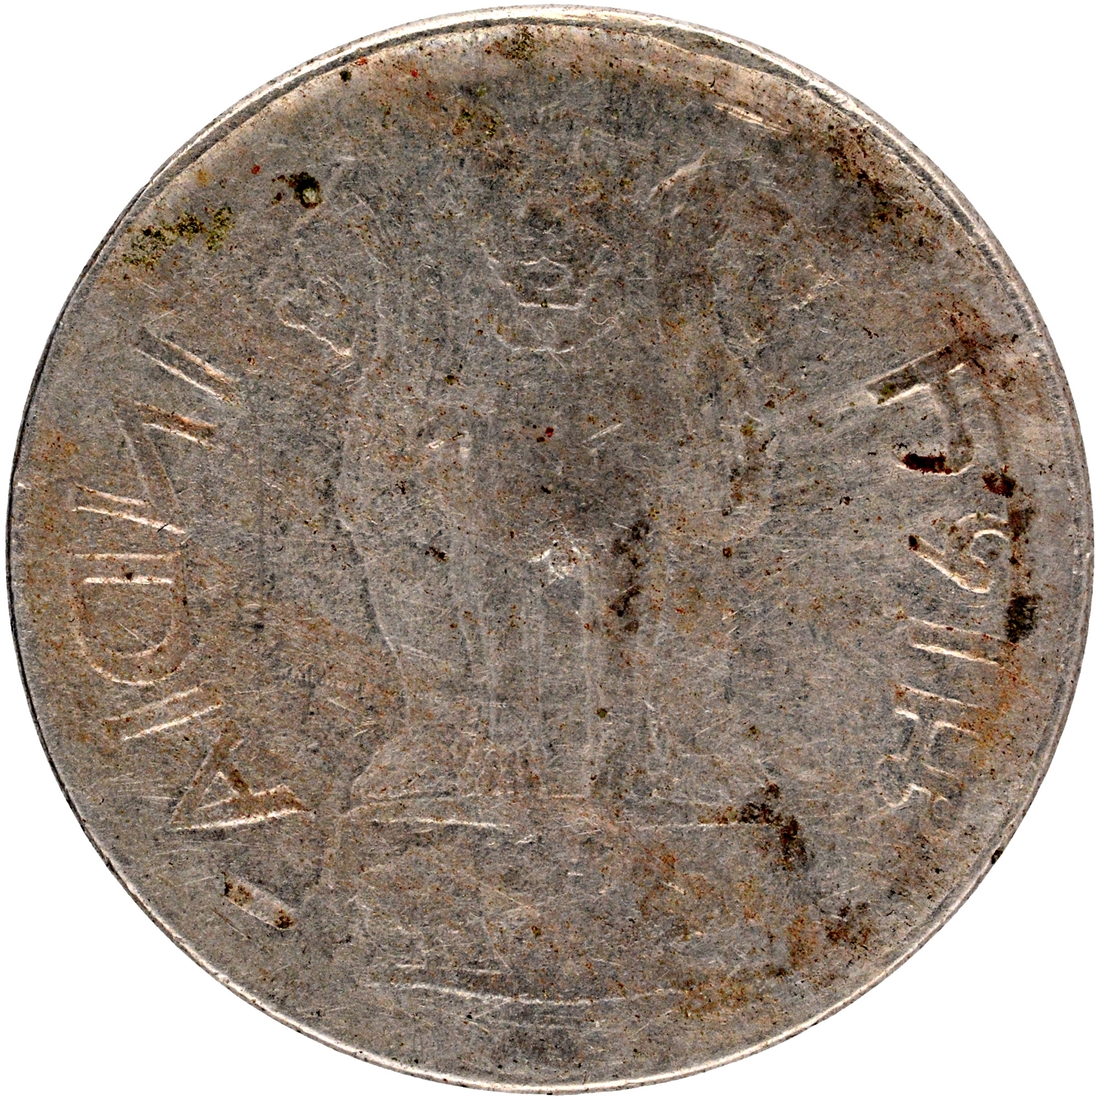  Very Rare Brockage (Deep Lakhi) Error Copper Nickel Twenty Five Paise Coin of Republic India. 